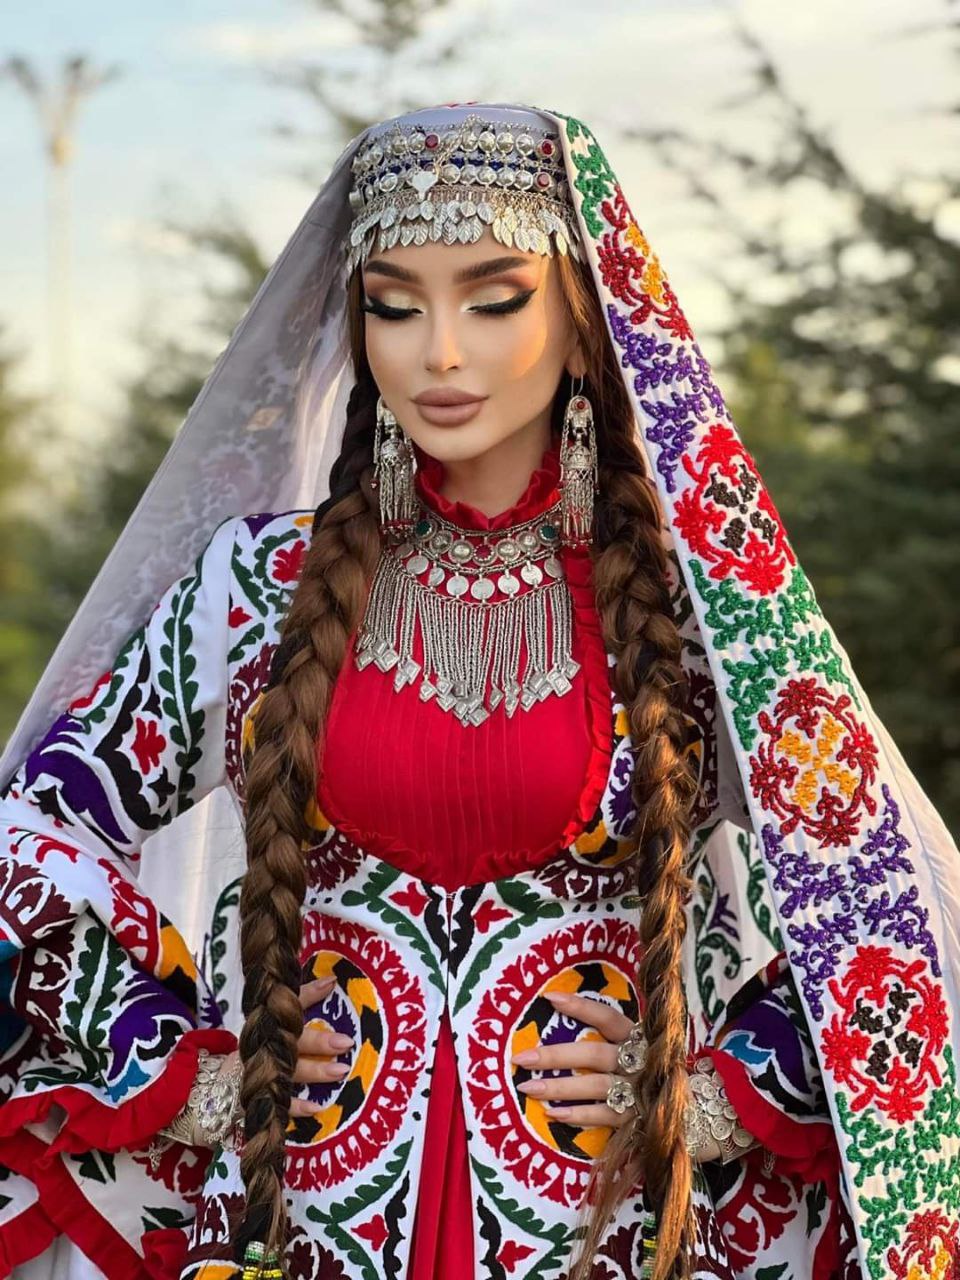 Таджикистан девушки. Таджикистан люди внешность. Таджикские девушки в национальной одежде. Таджикские девушки в национальных нарядах.